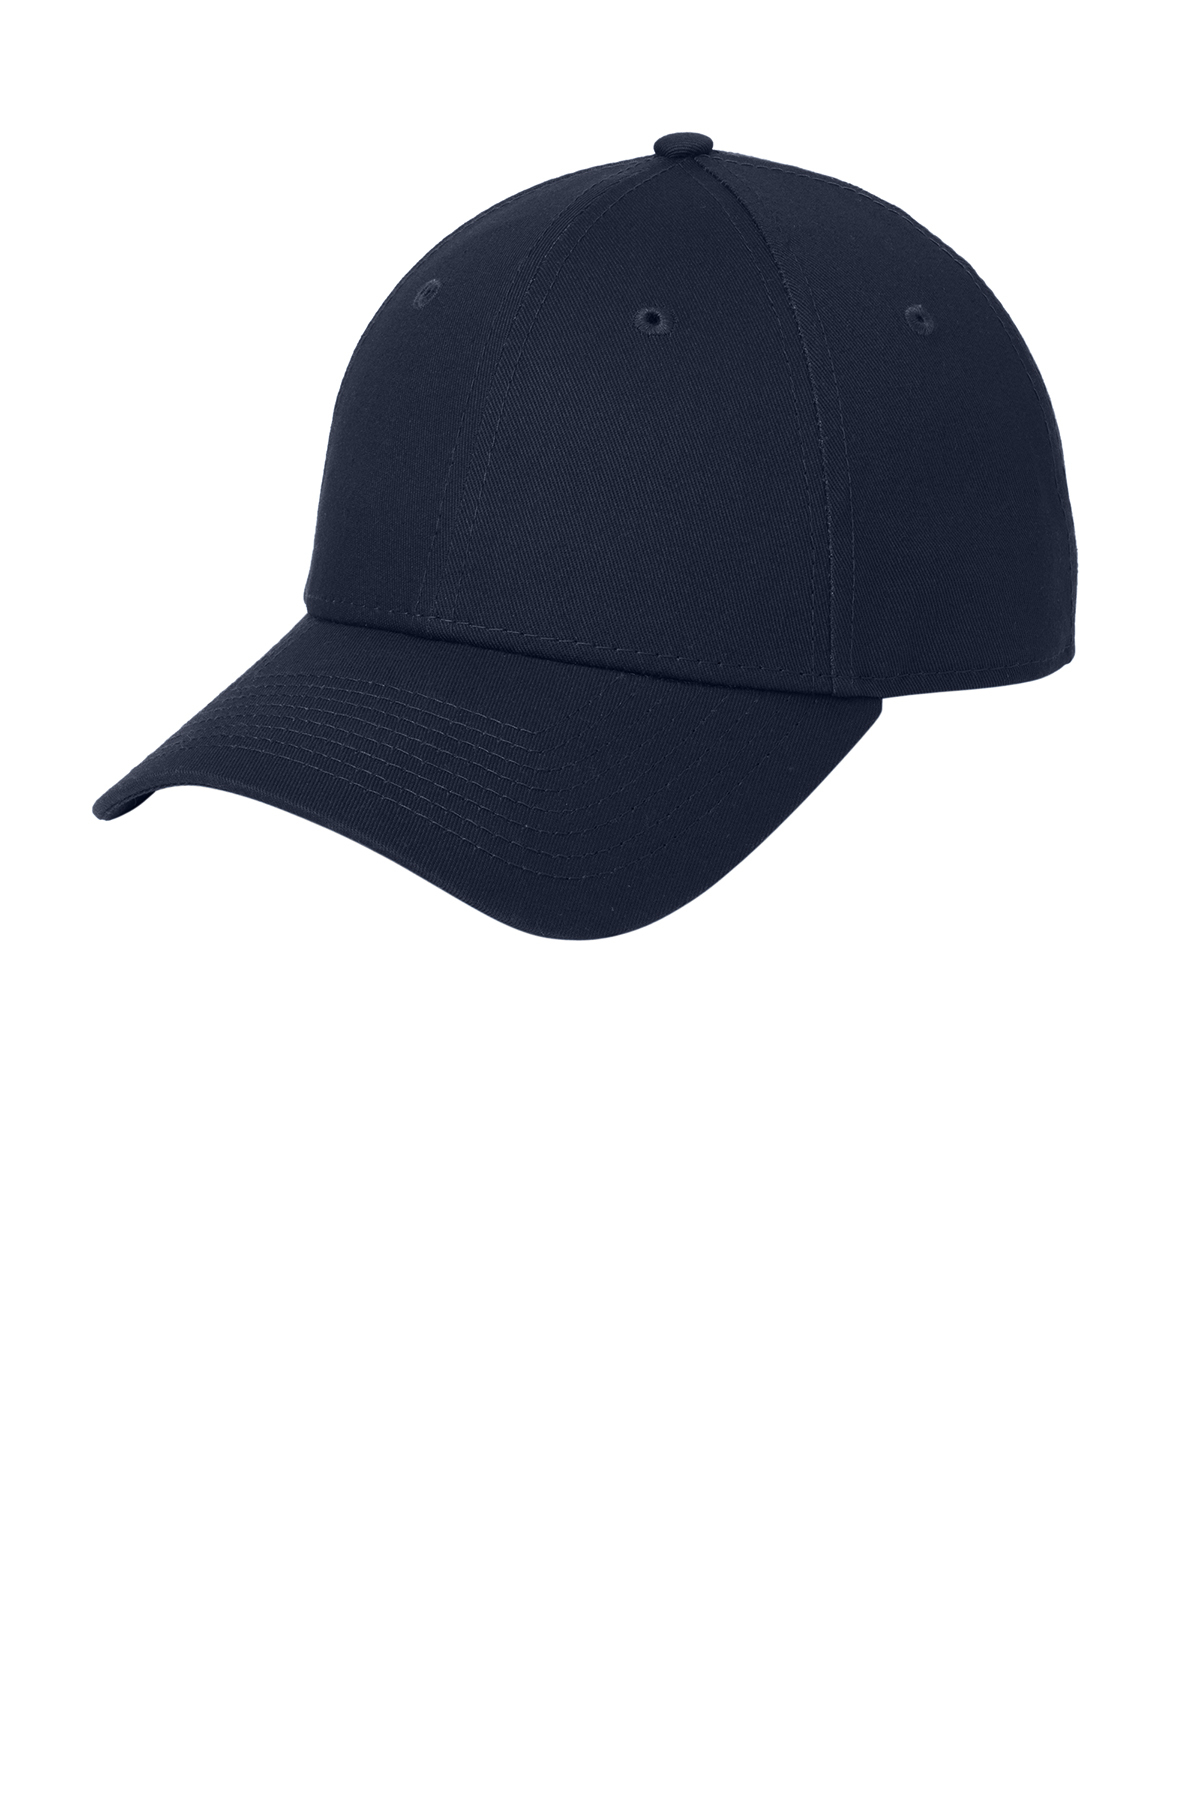 New Era - Adjustable Structured Cap, Product